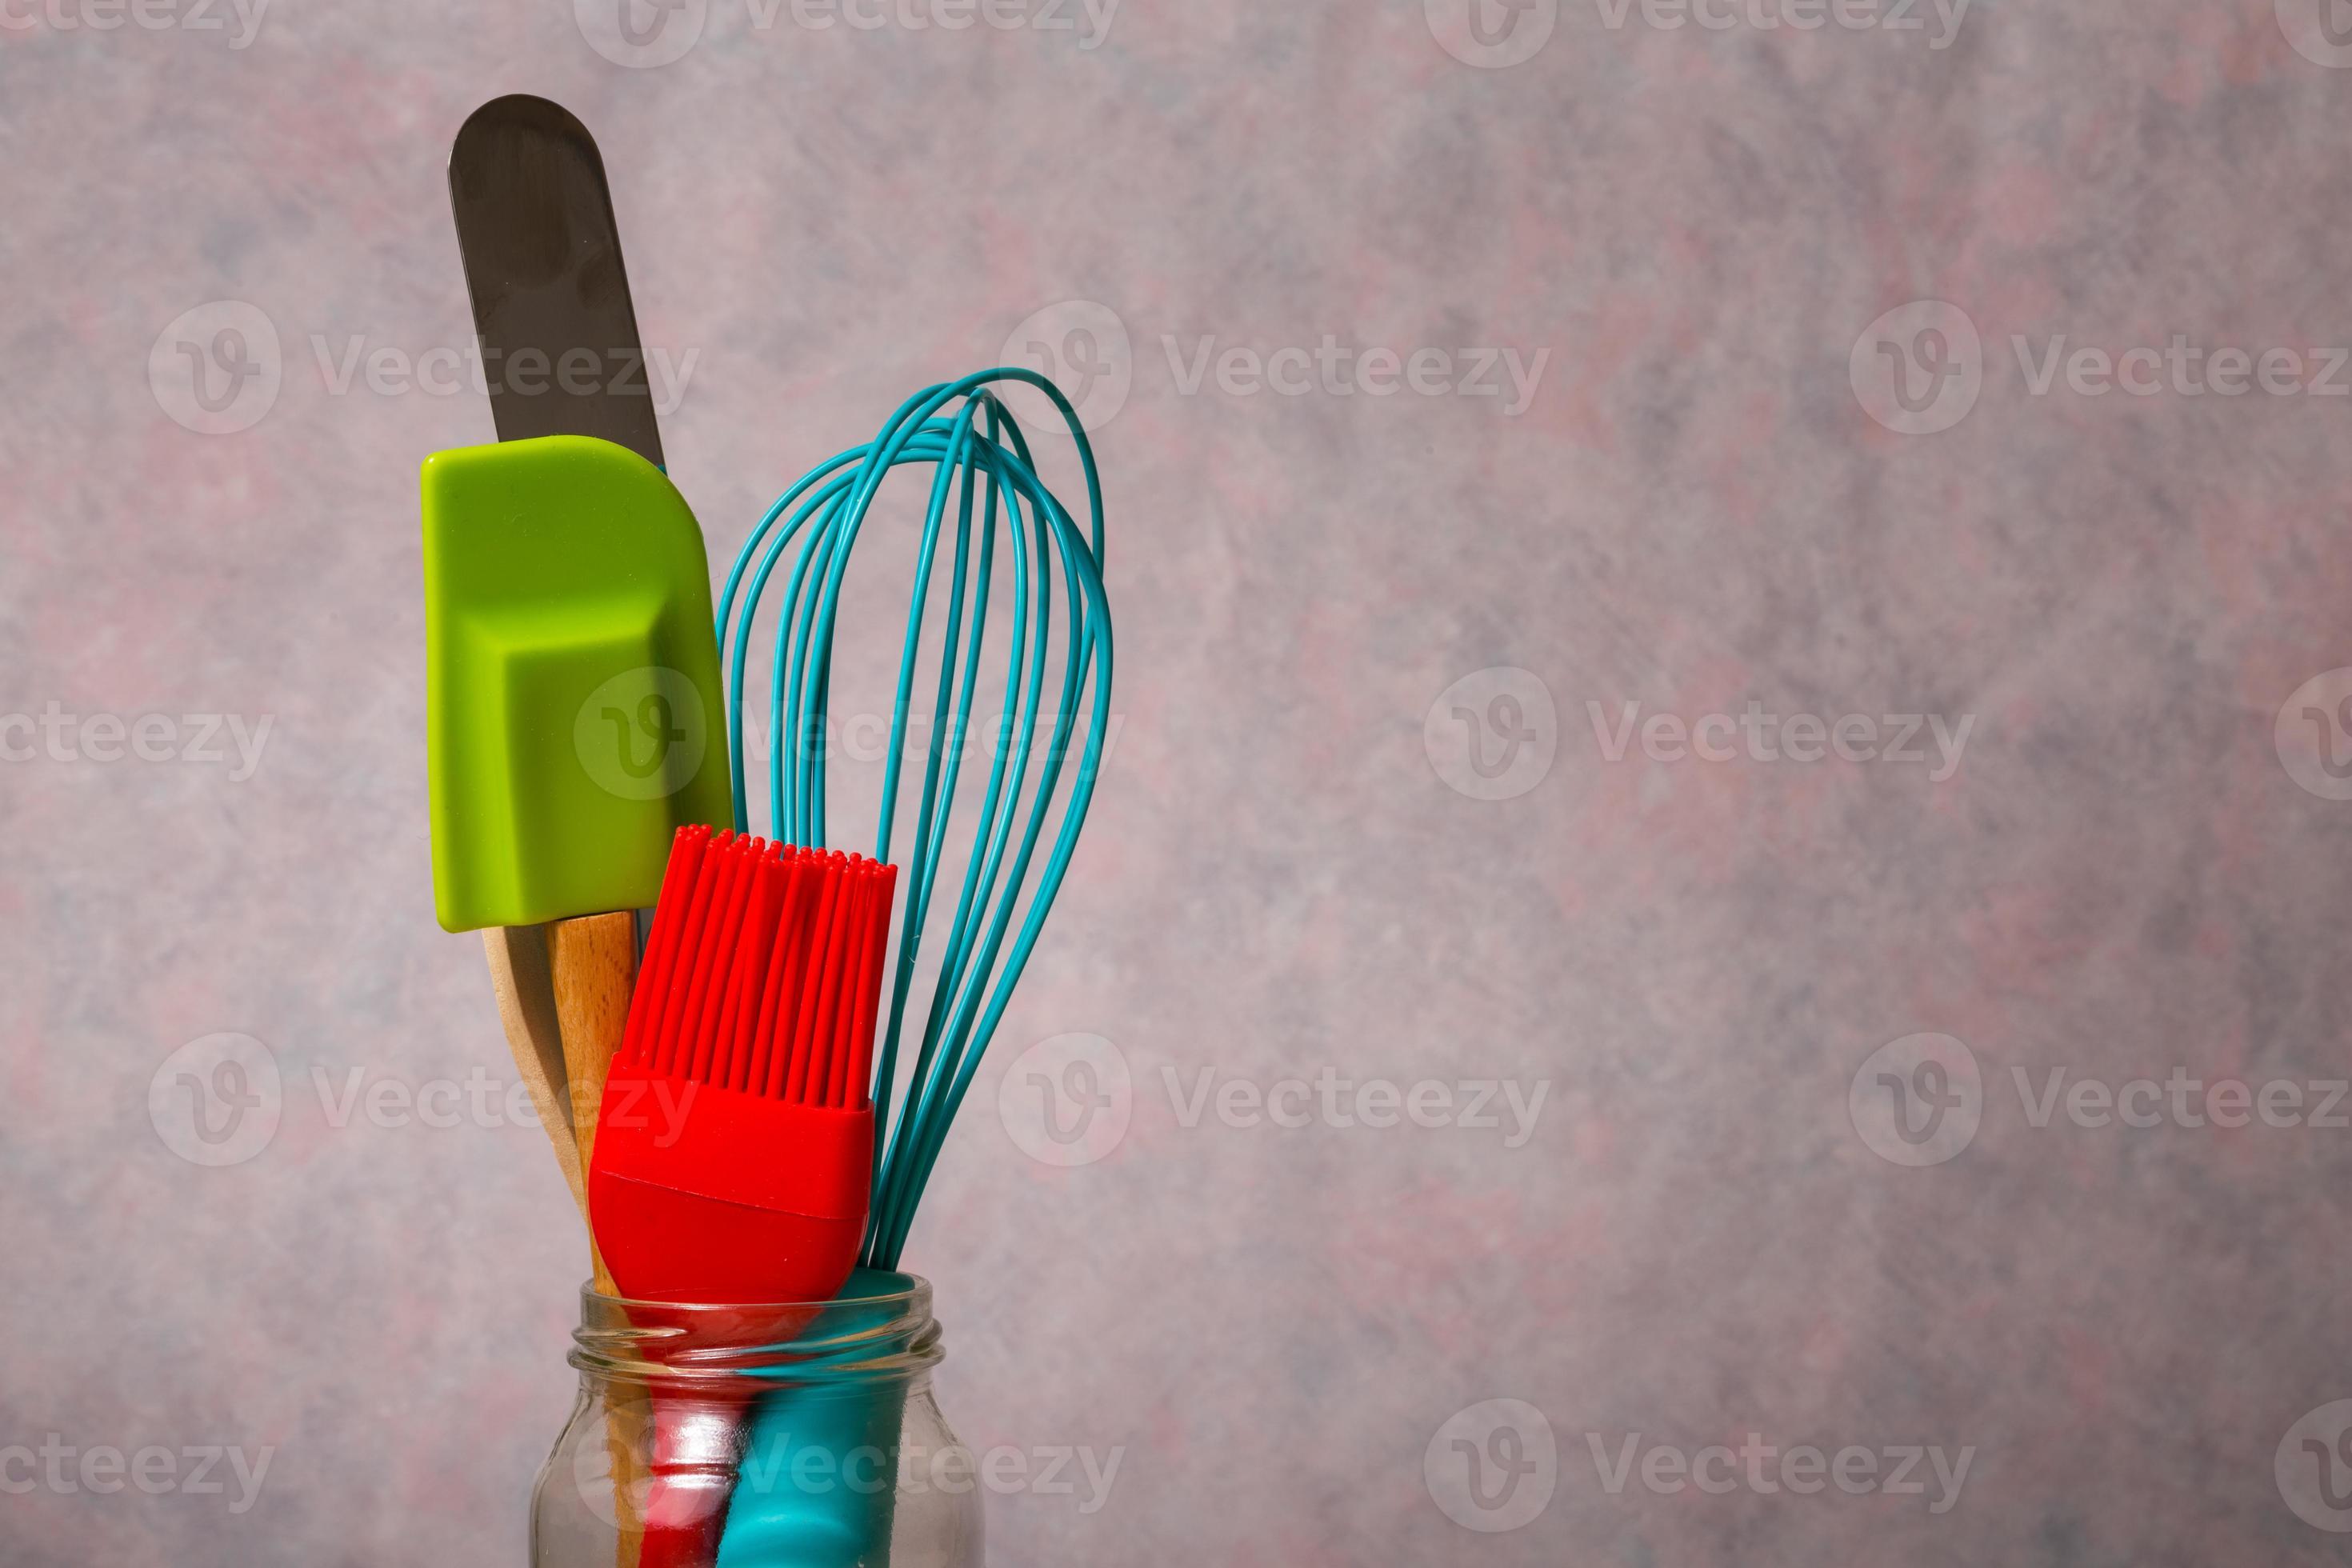 kitchen utensils photo